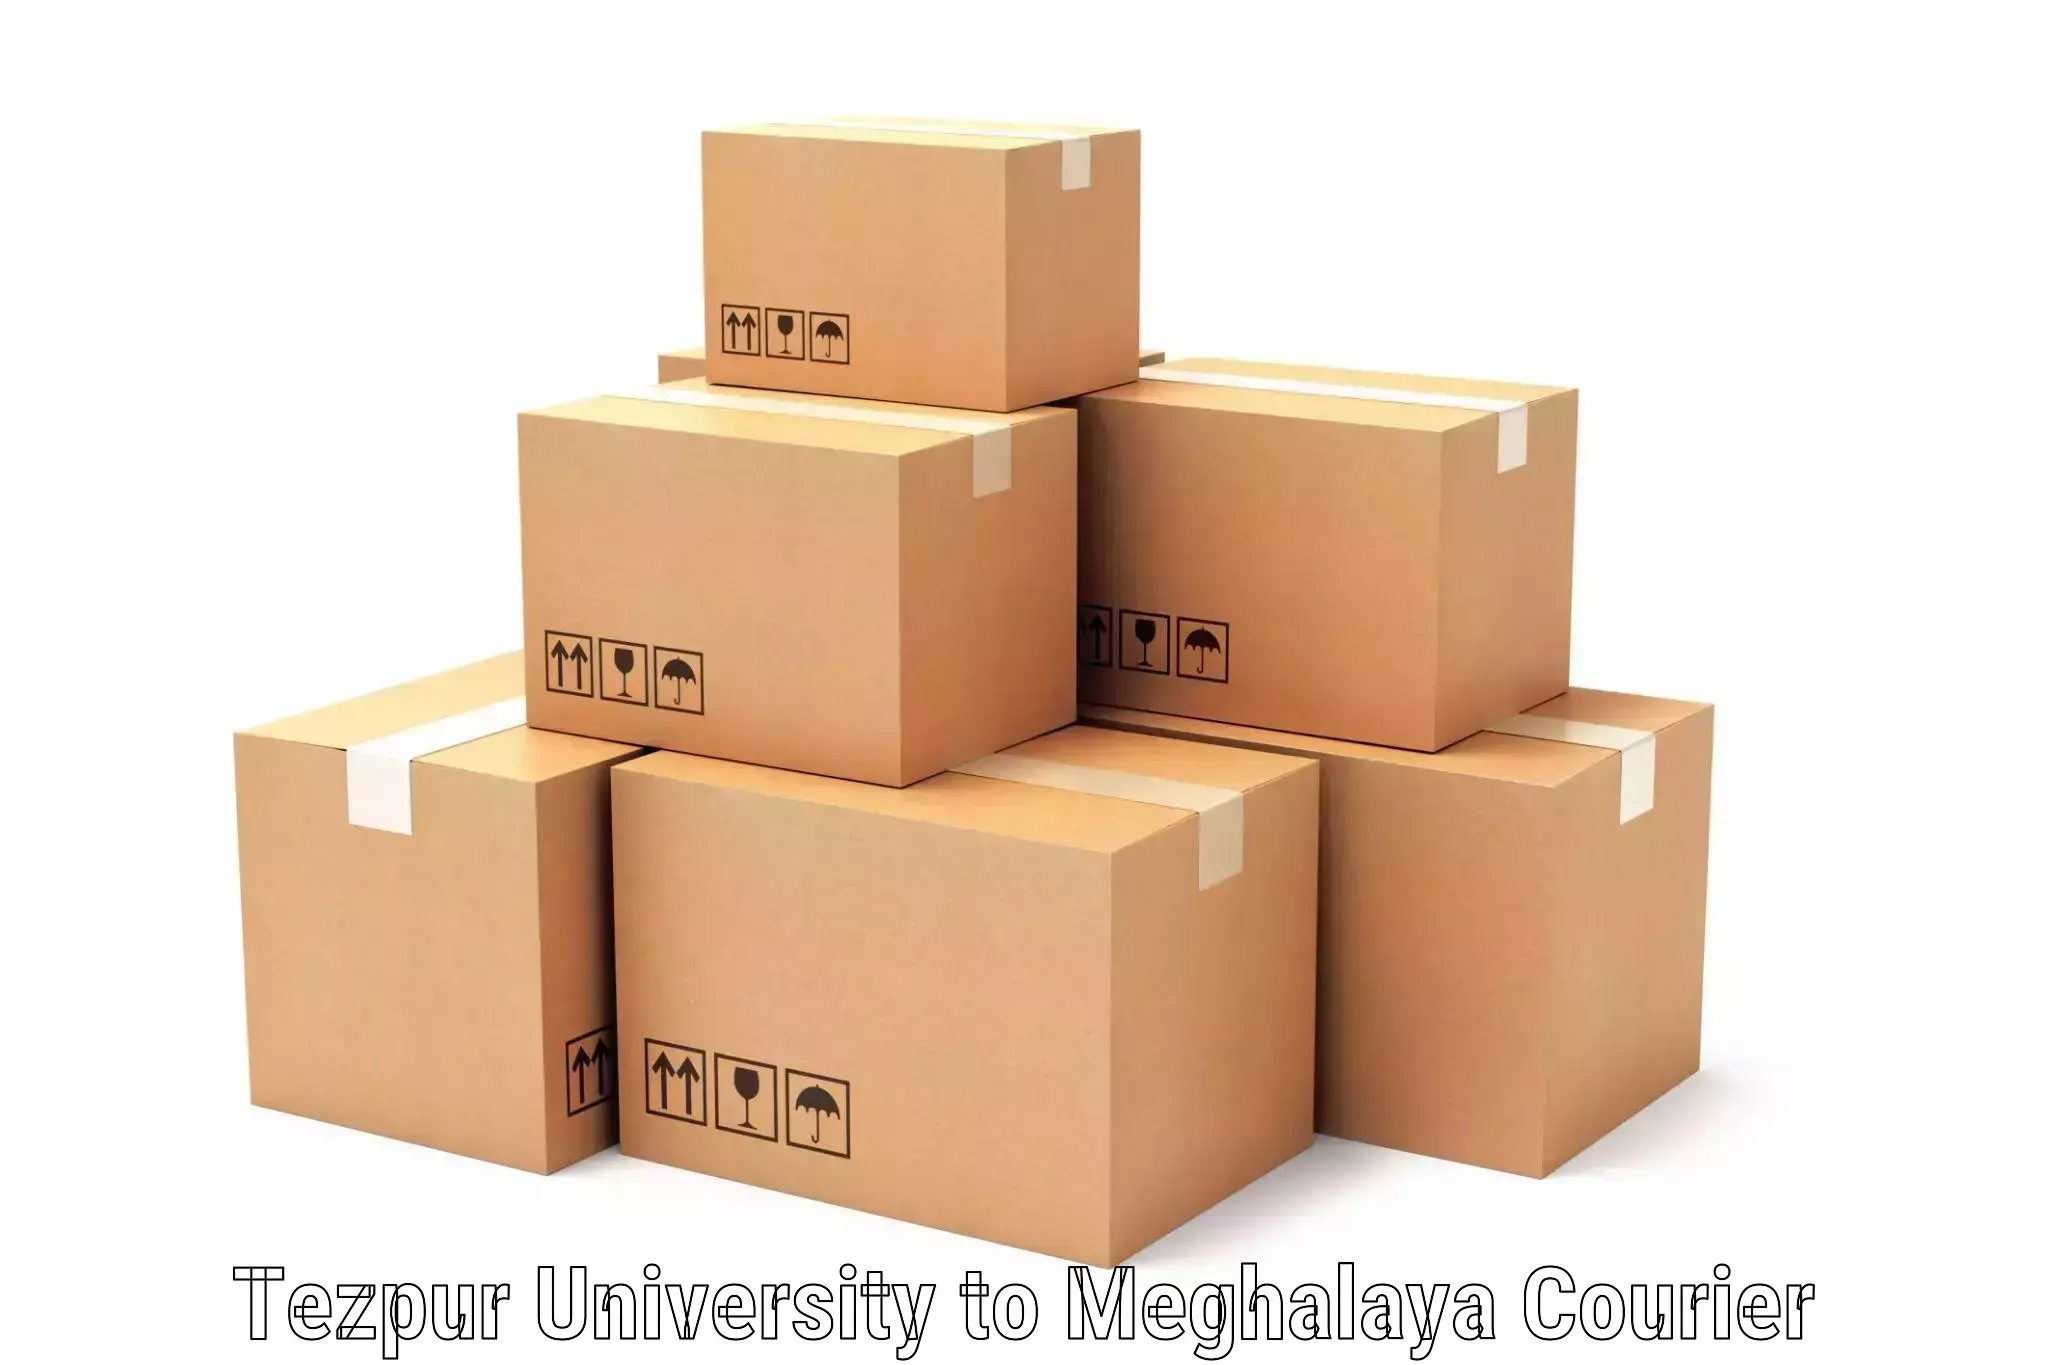 Speedy delivery service Tezpur University to Shillong